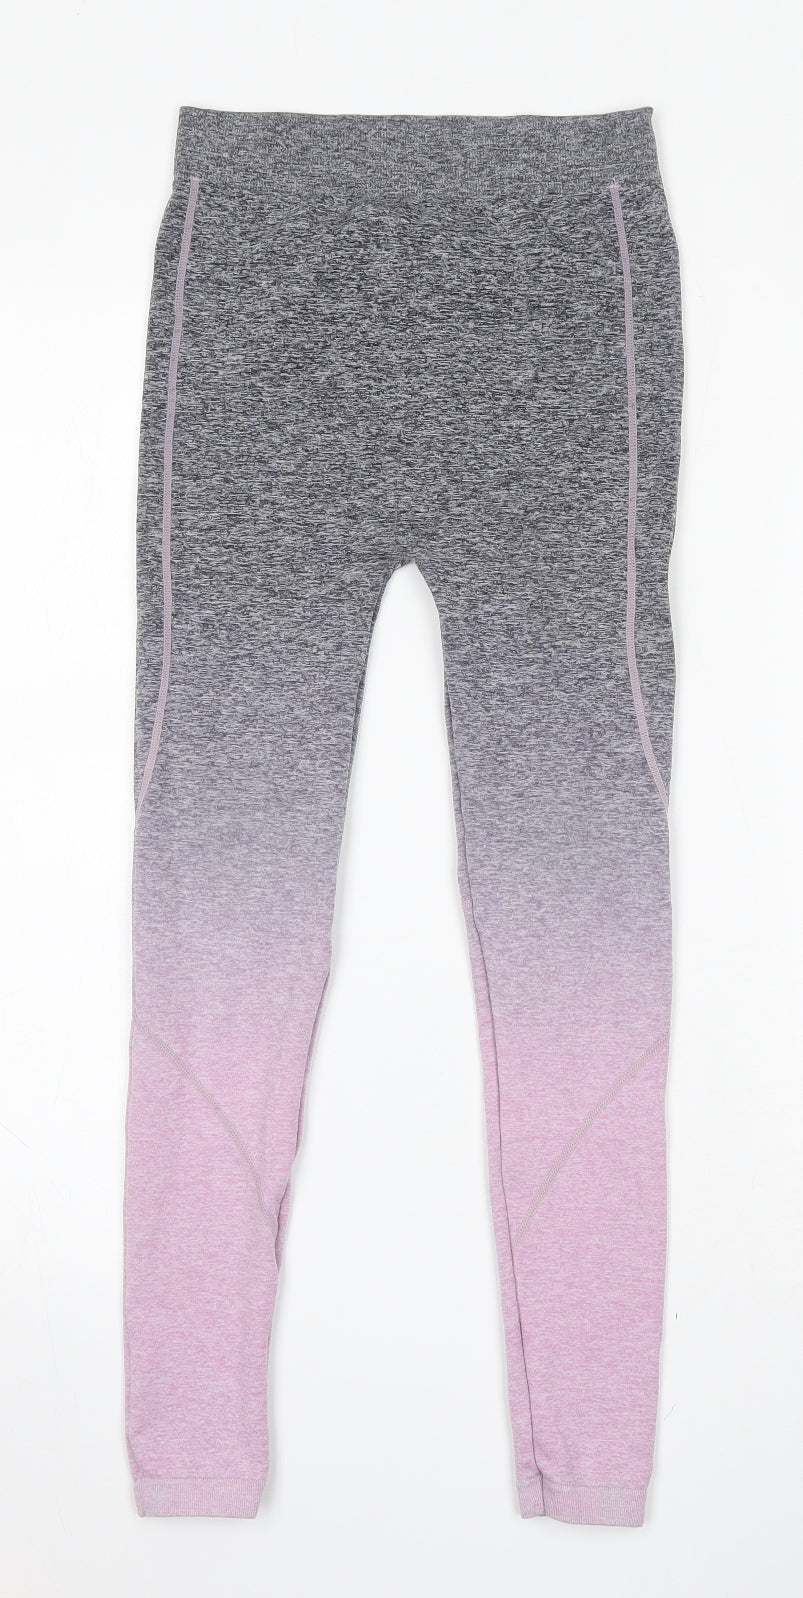 Primark Girls Grey  Nylon Capri Trousers Size 9-10 Years  Regular